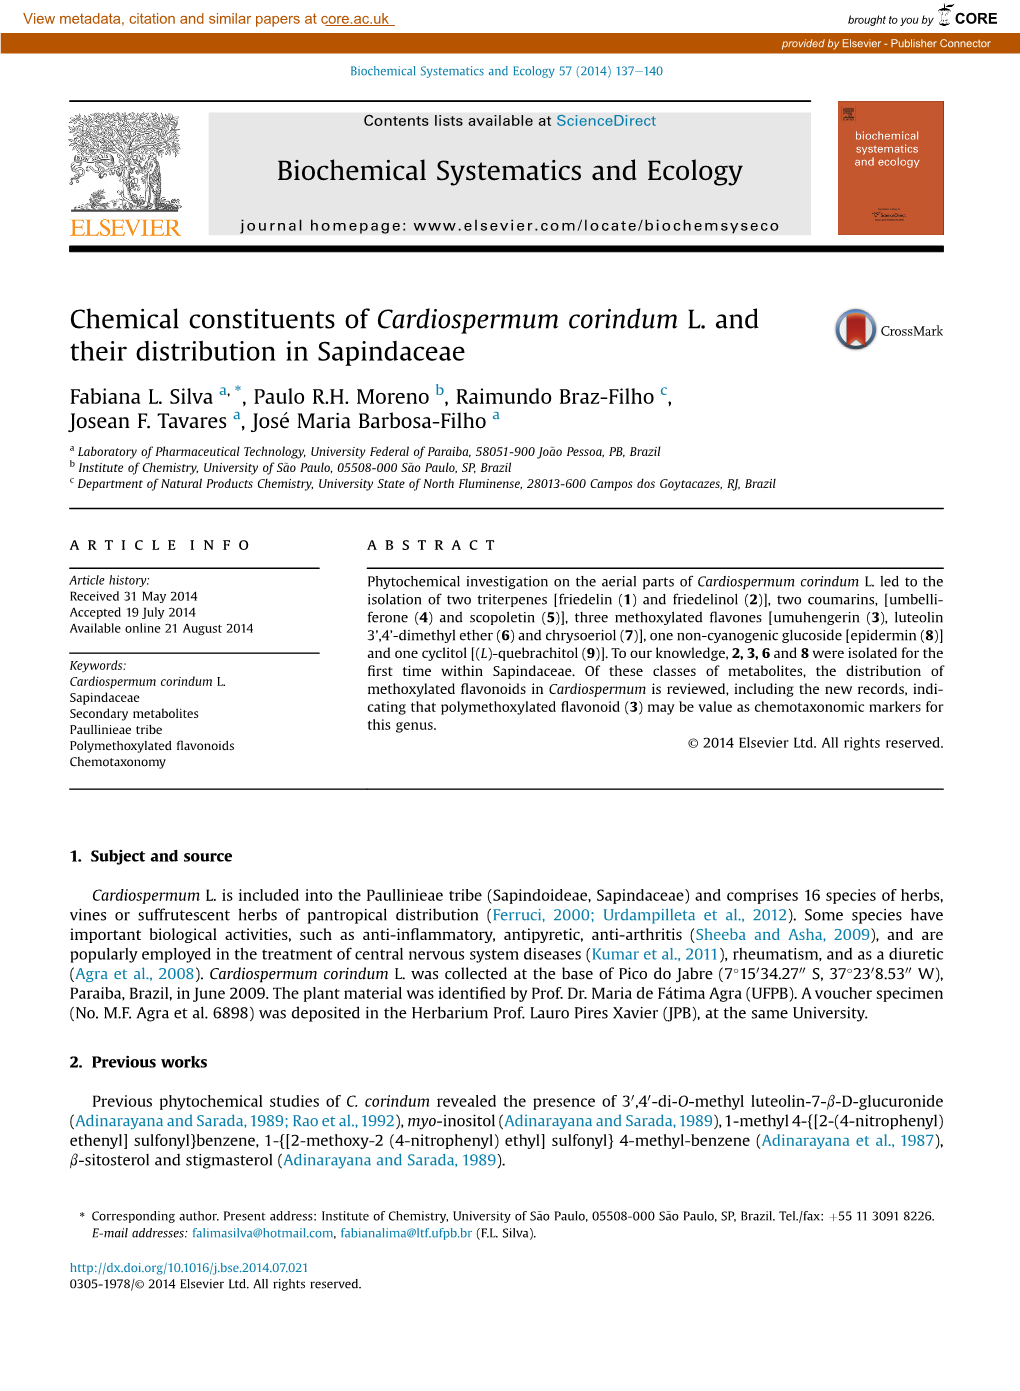 Chemical Constituents of Cardiospermum Corindum L. and Their Distribution in Sapindaceae